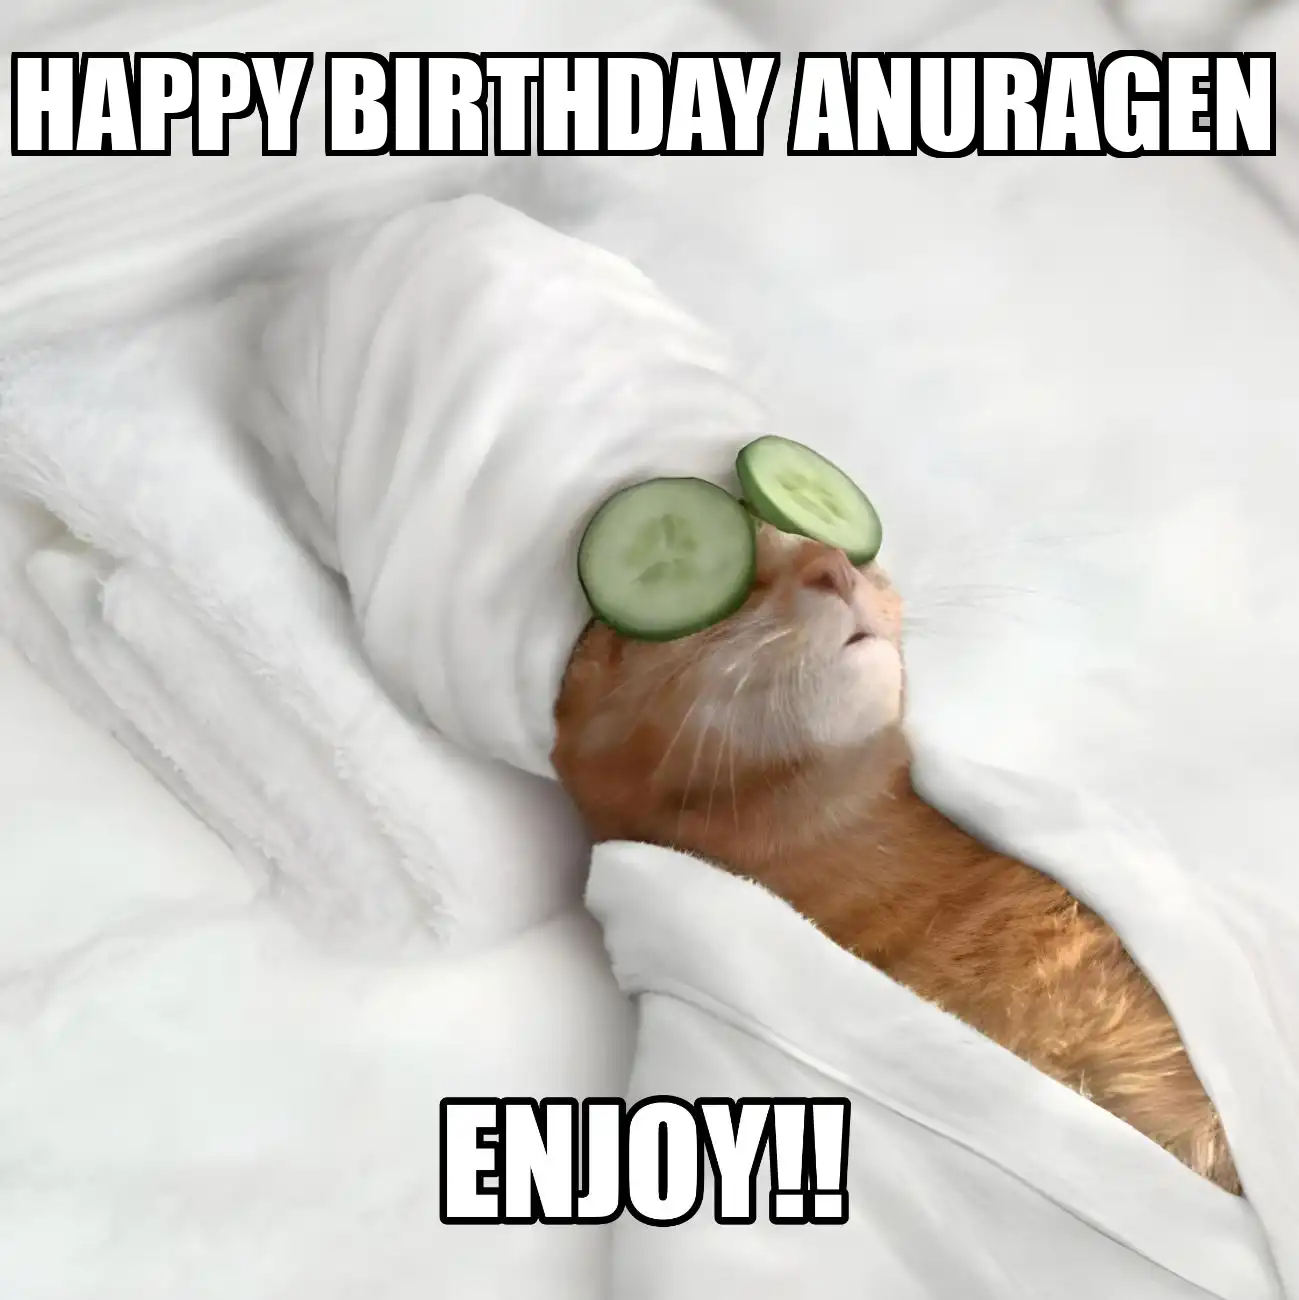 Happy Birthday Anuragen Enjoy Cat Meme